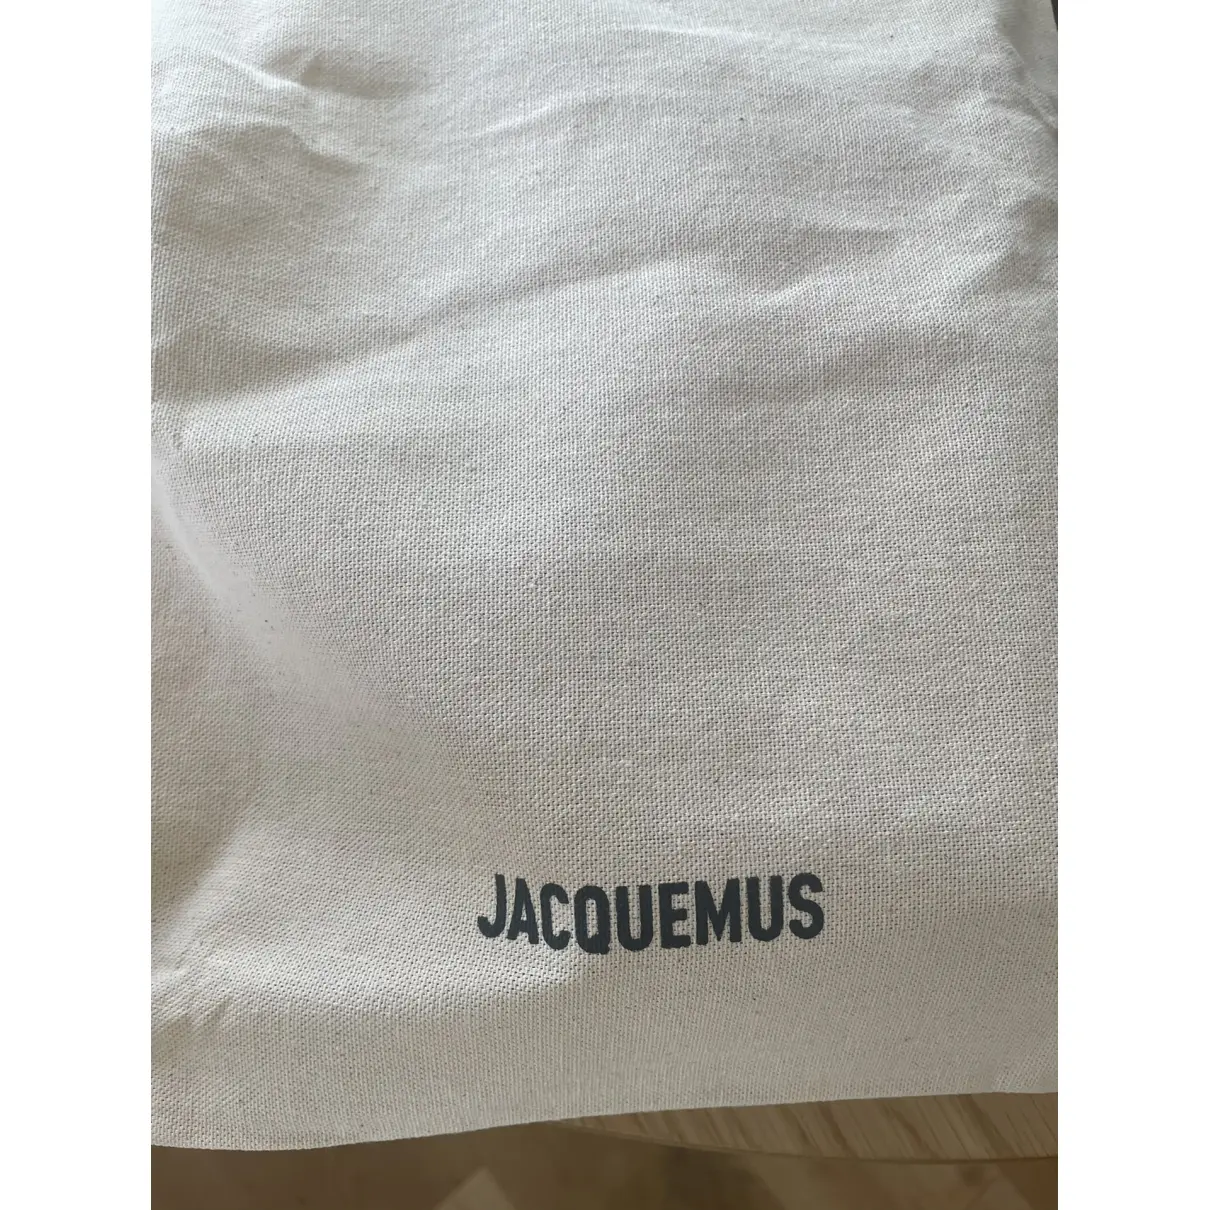 Le Baneto handbag Jacquemus